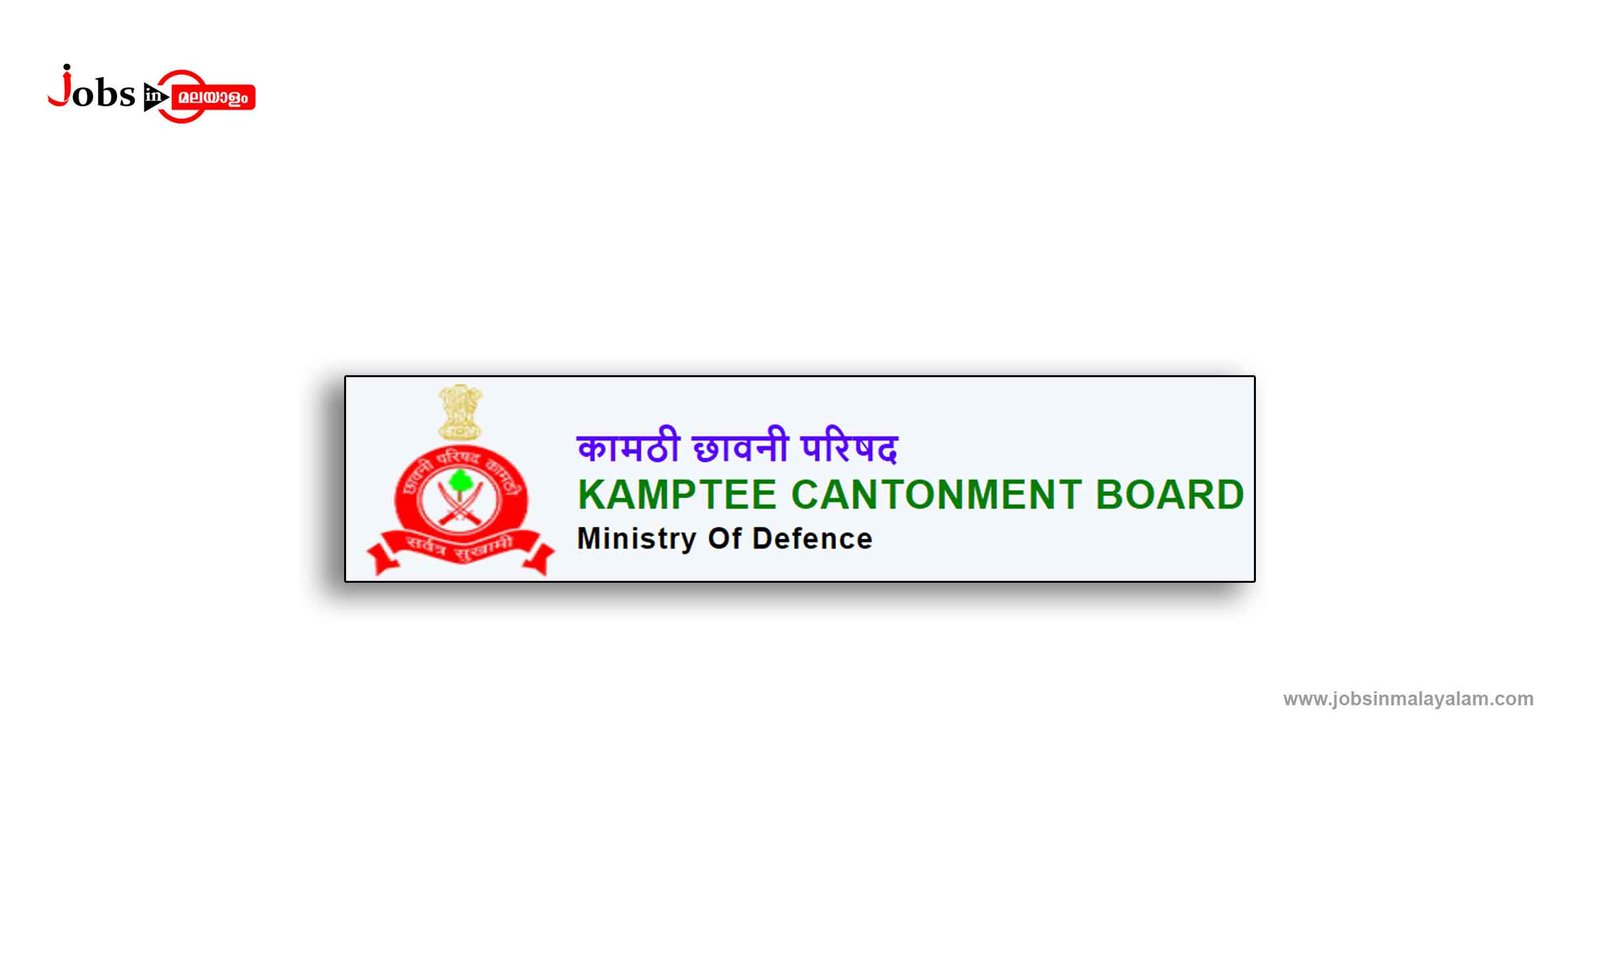 Kamptee Cantonment Board